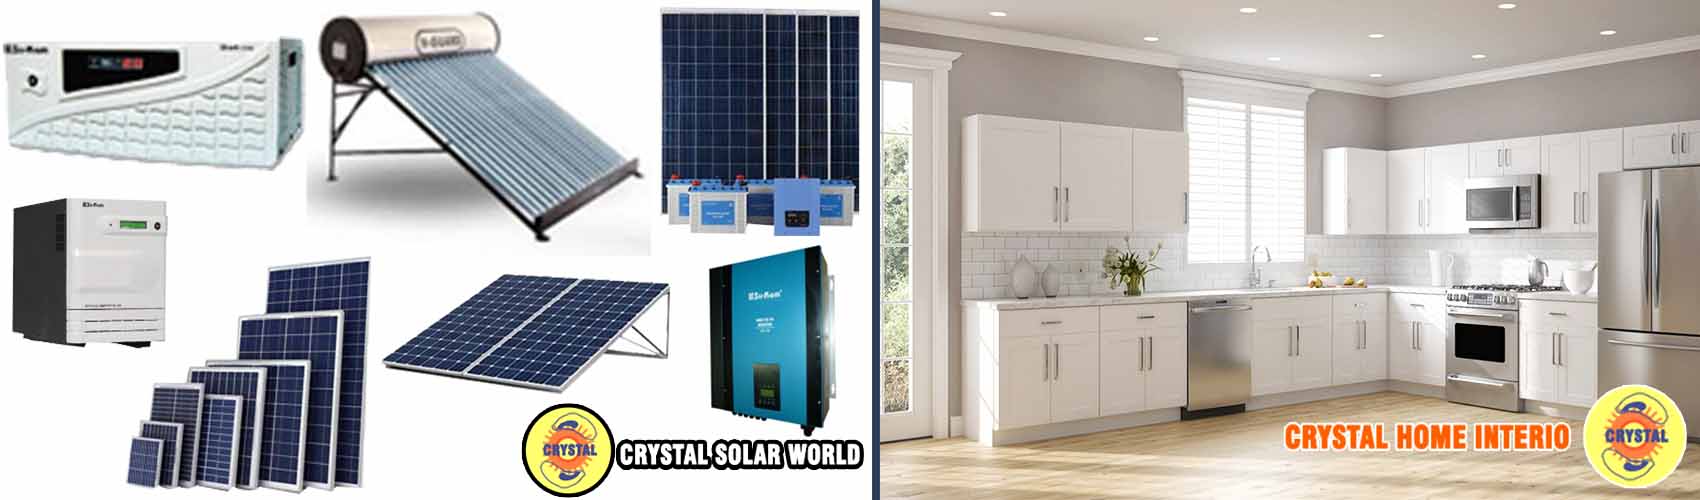 Crystal Solar World